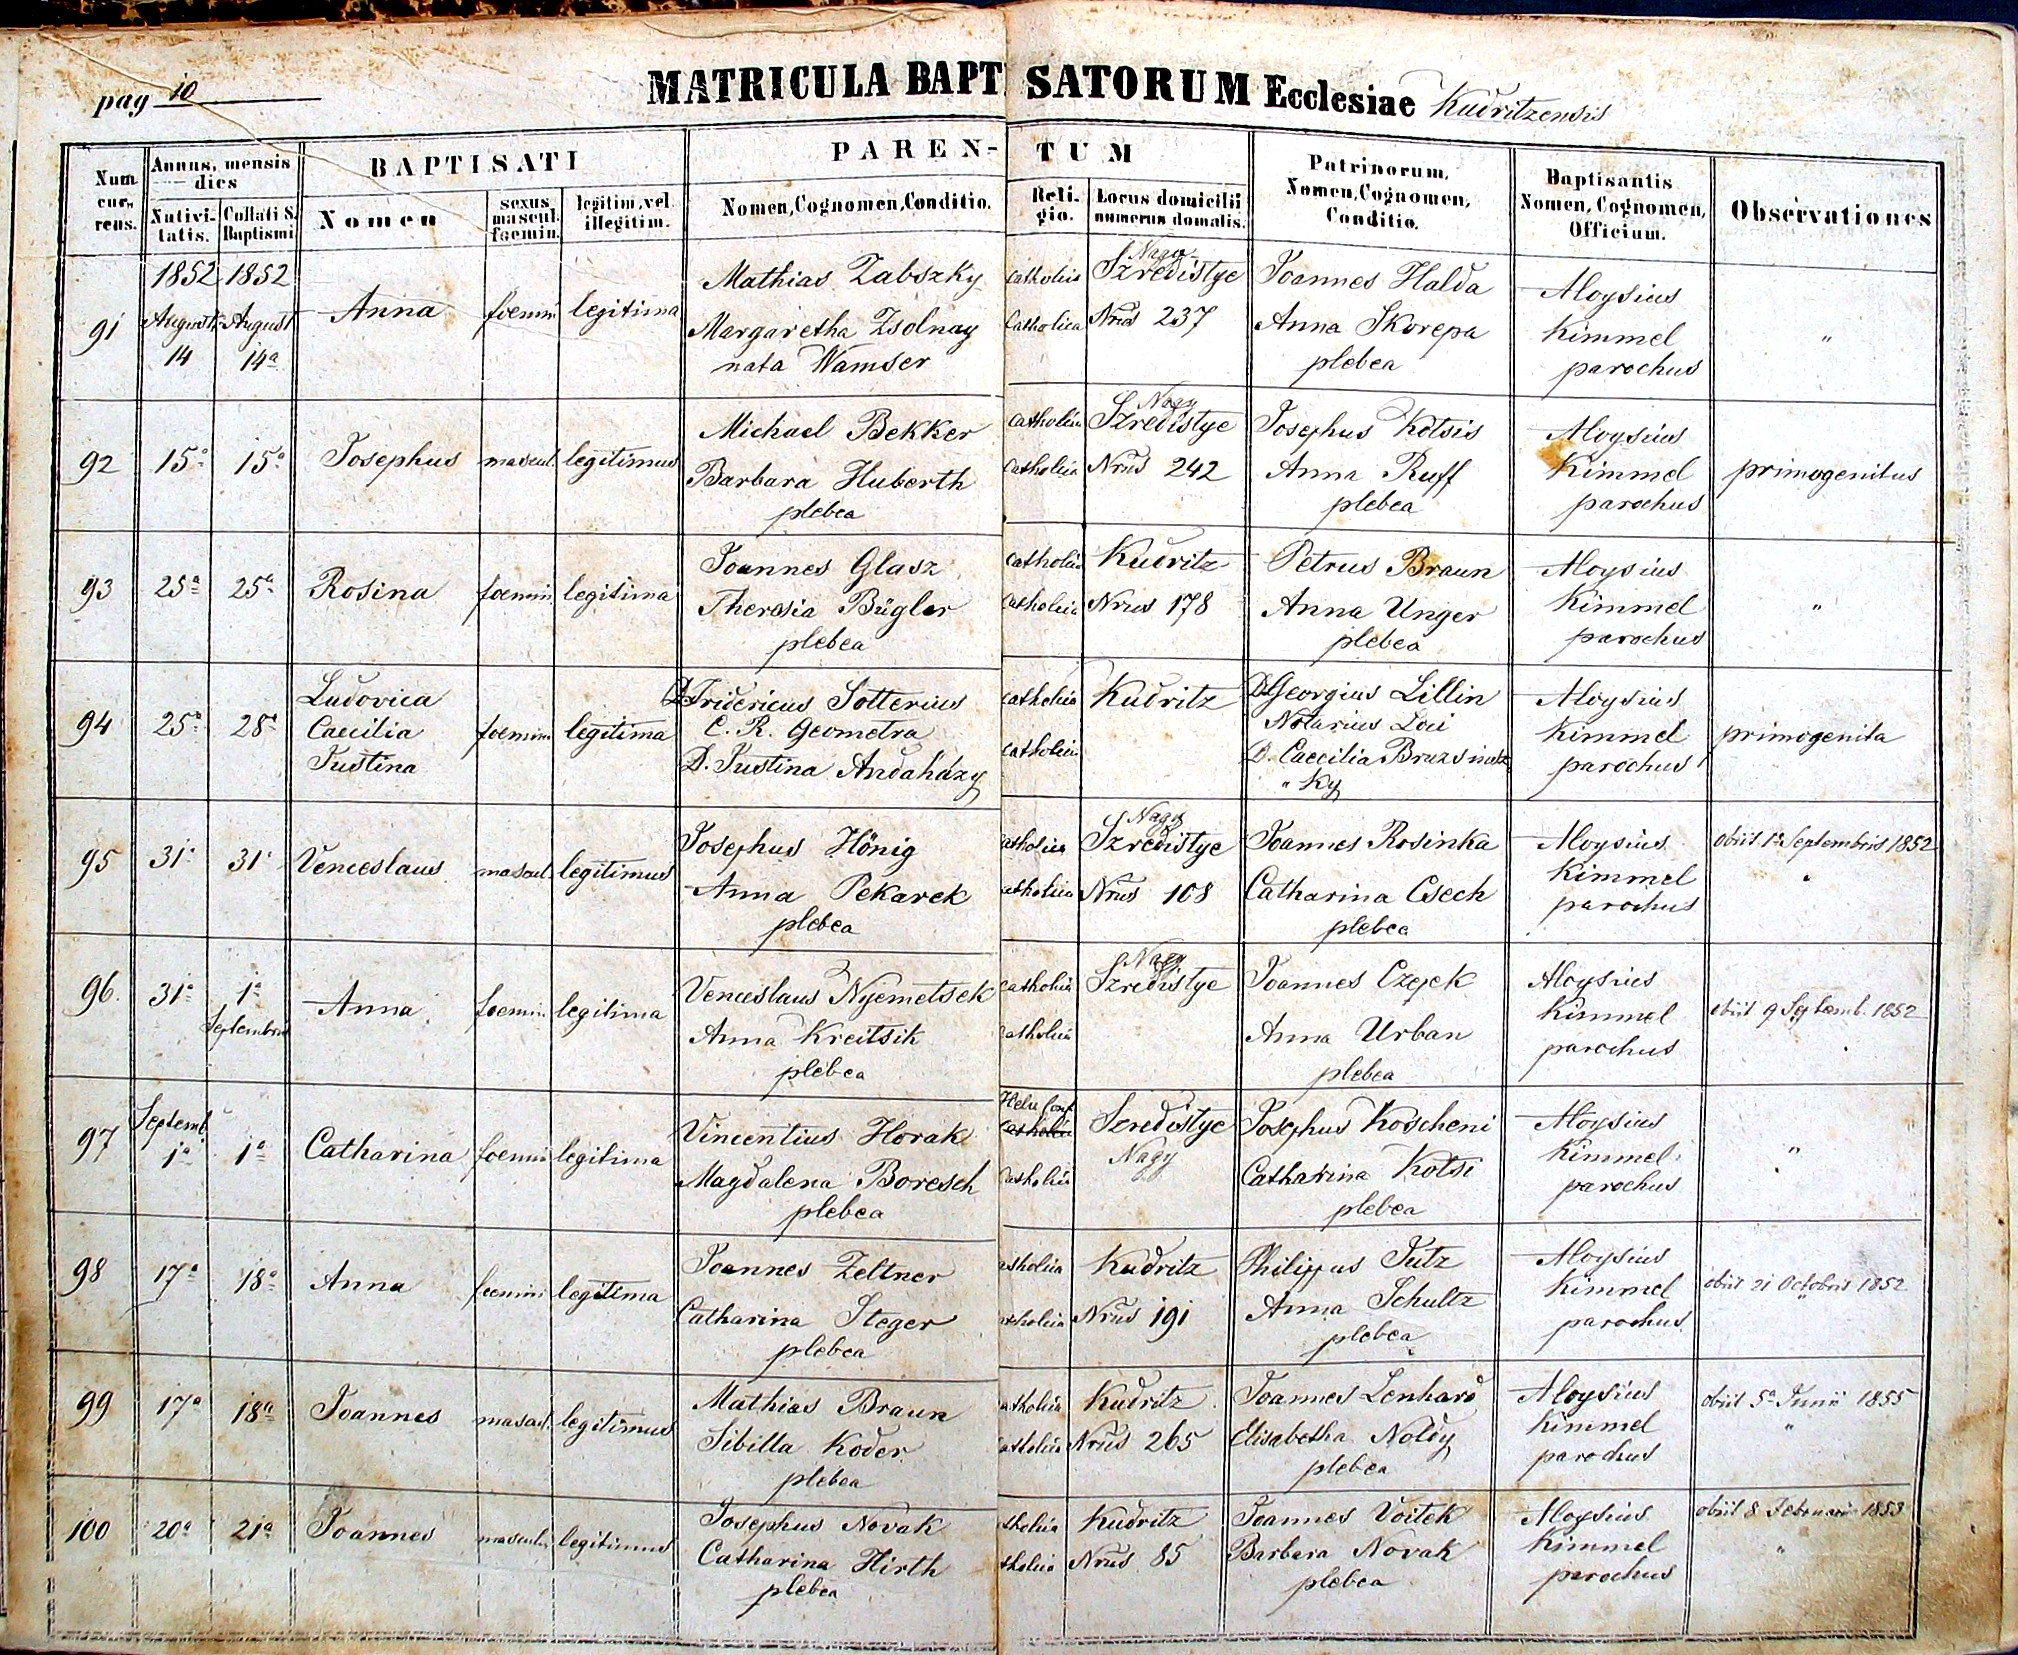 images/church_records/BIRTHS/1852-1870B/010